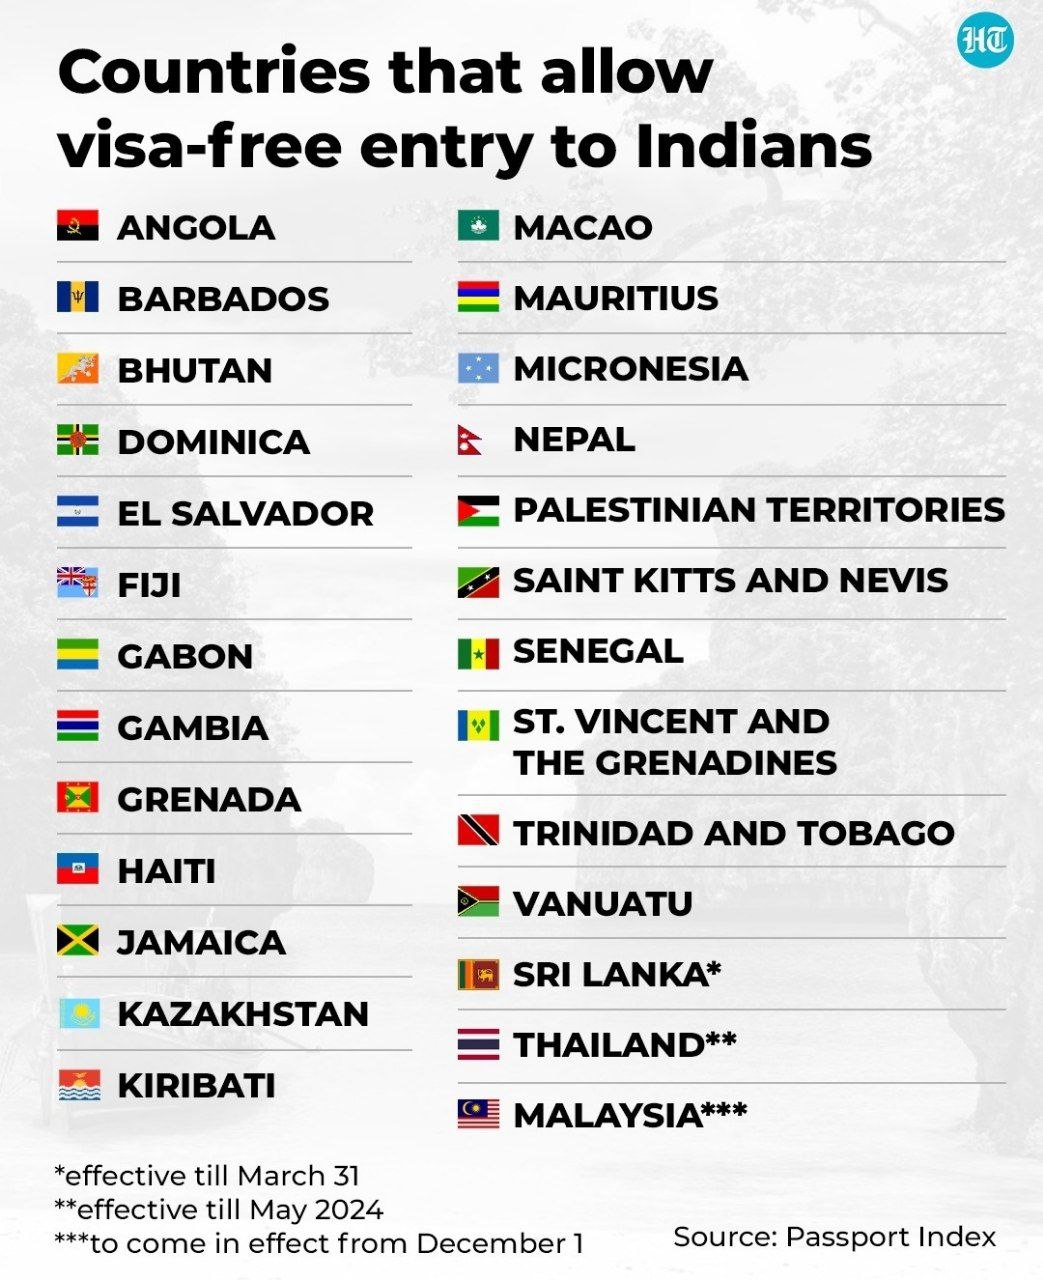 indian passport mexico visa